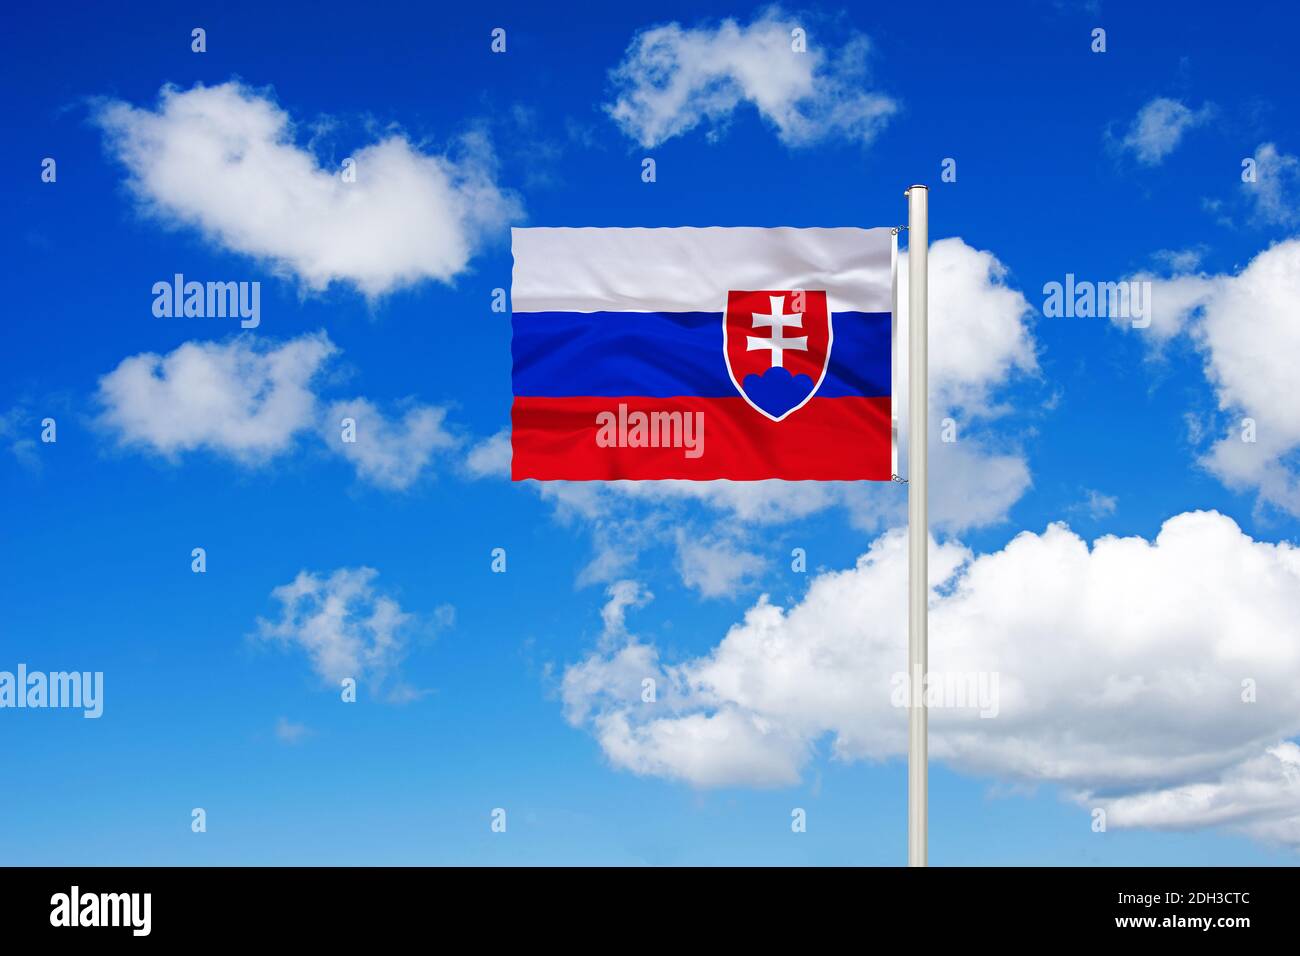 Europa, la Mitteleuropa, Slovaquie, Nationalfahne Nationalflagge,,, Flaggenmast Fahne Flagge, Cumulus, Wolken vor blauen Himmel, Banque D'Images